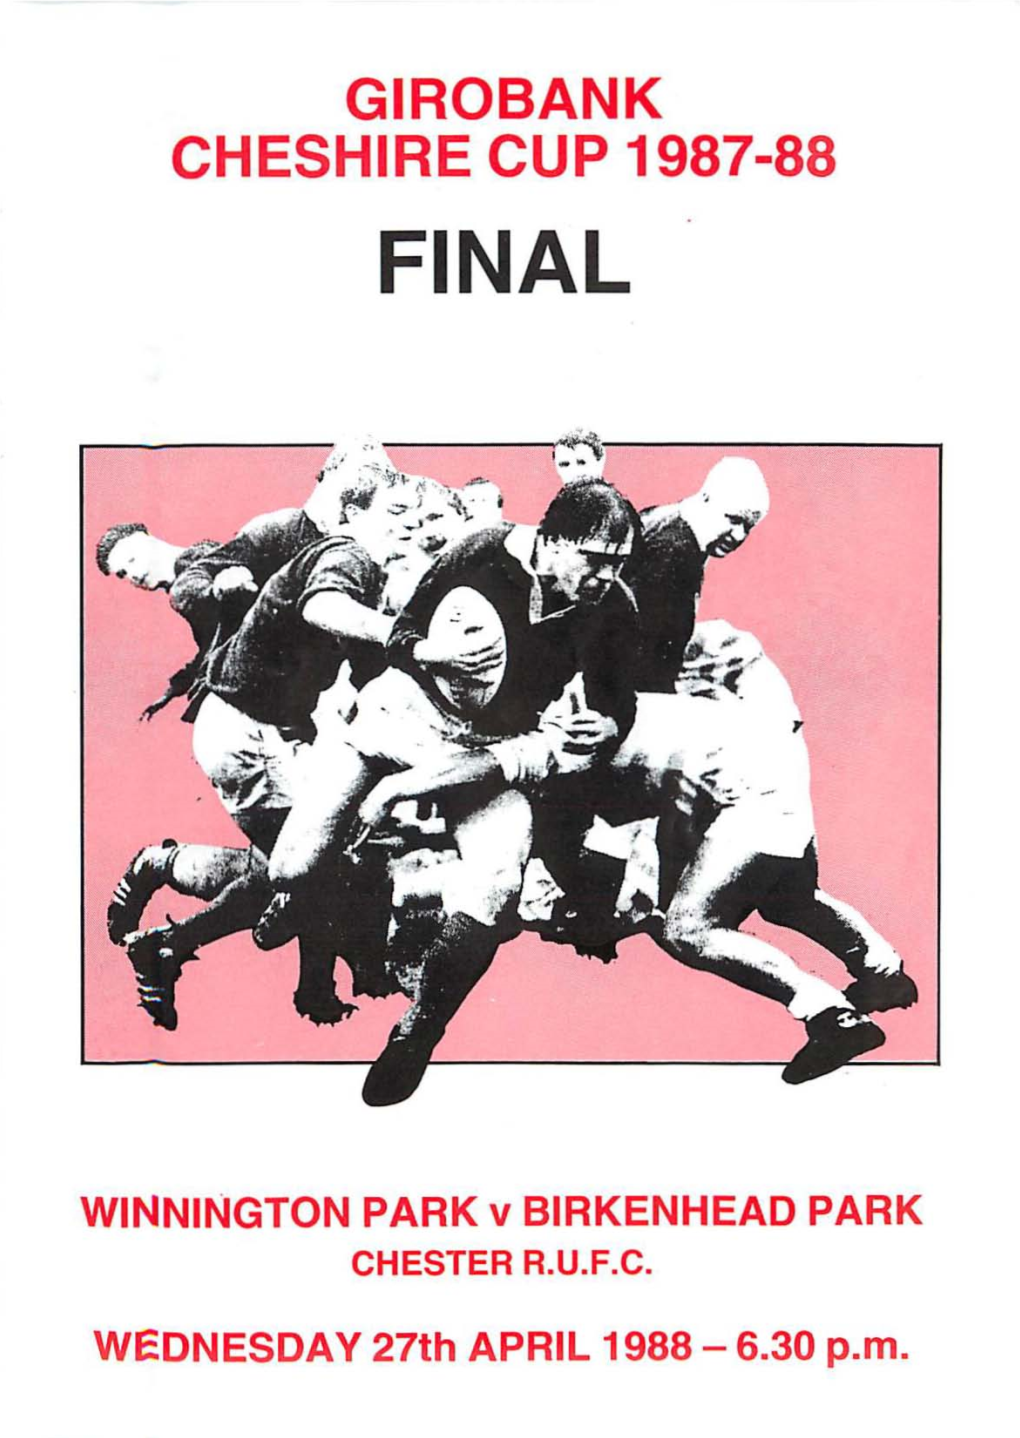 Girobank Cheshire Cup 1987-88 Final